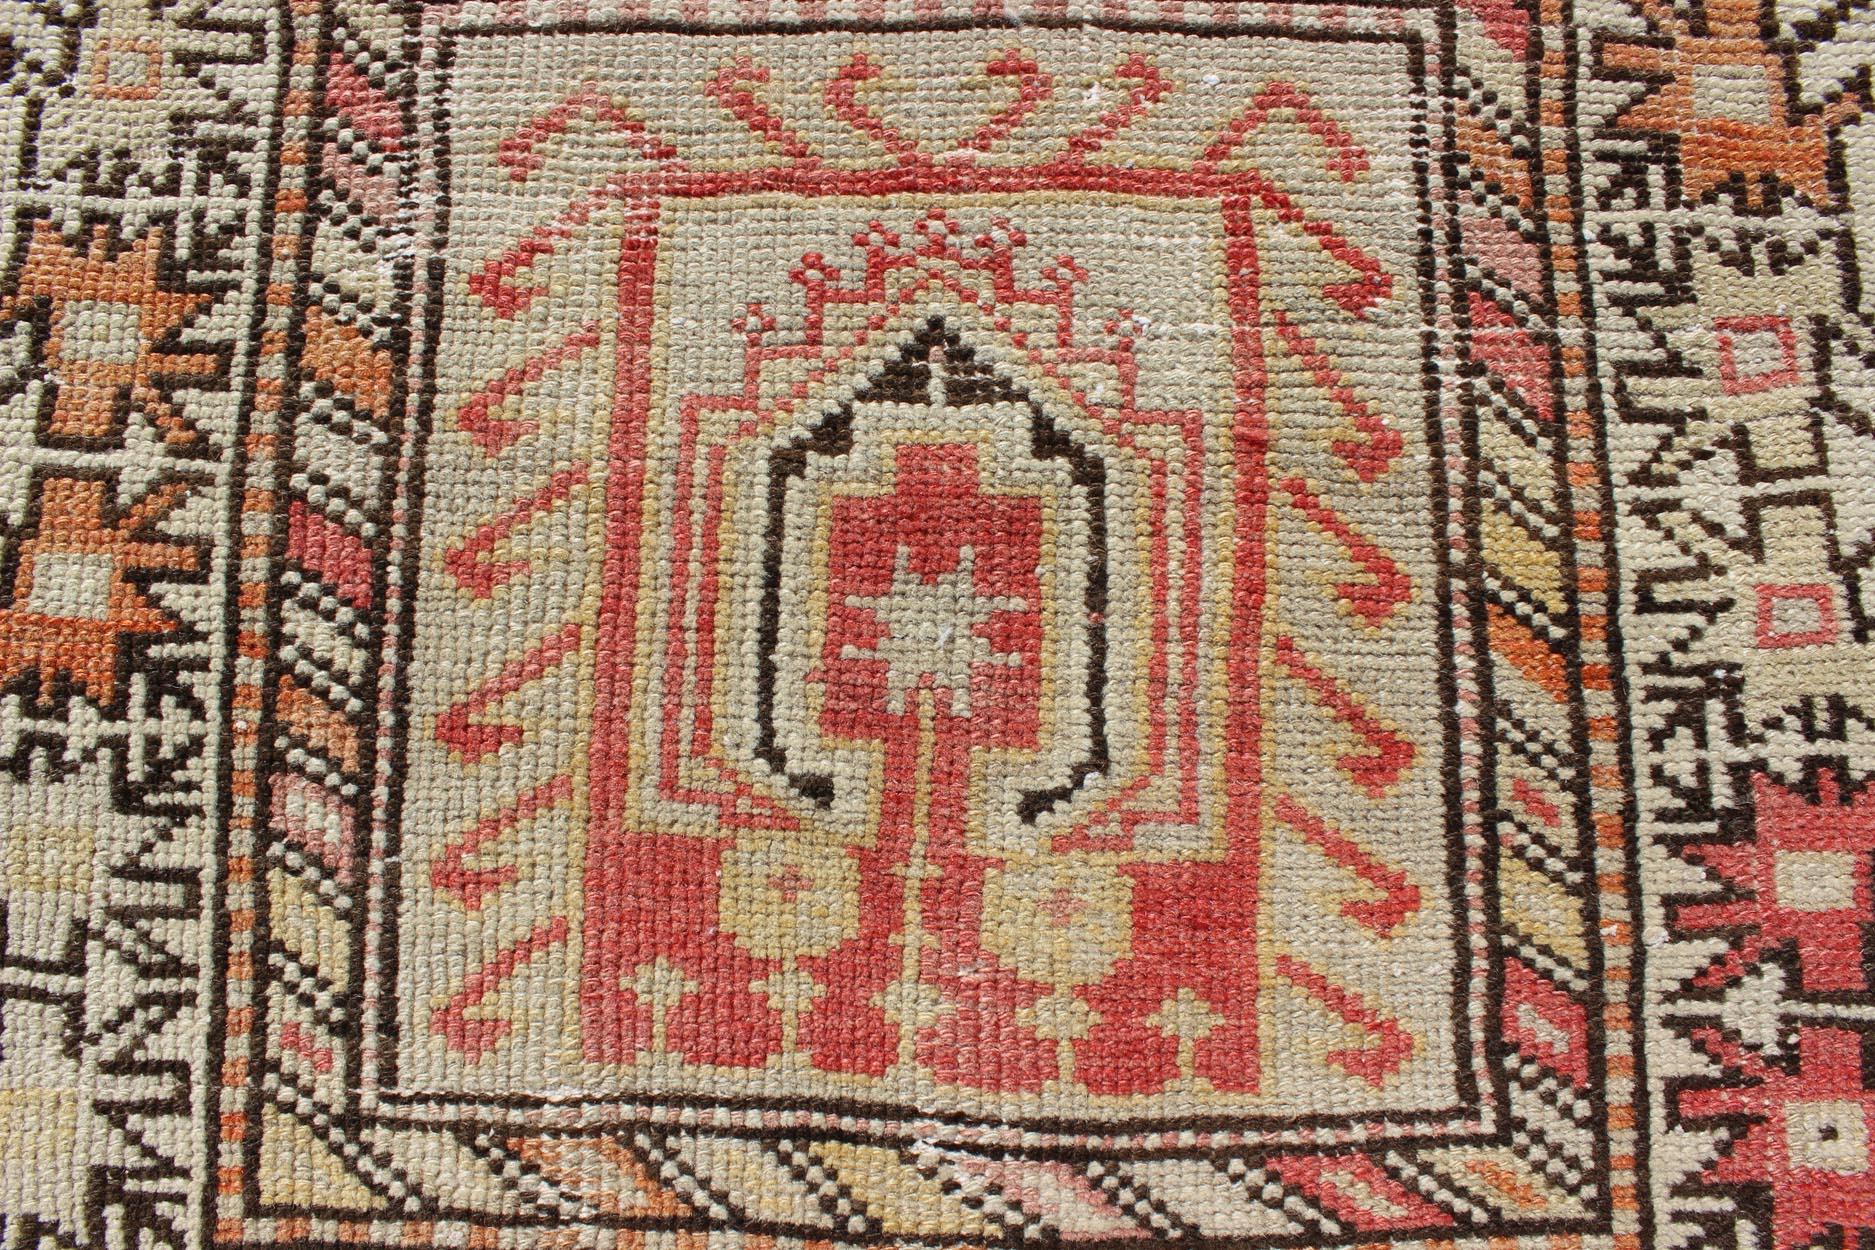 Tribal-Geometric Design Antique Turkish Oushak Rug in Burnt Orange and Brown For Sale 1